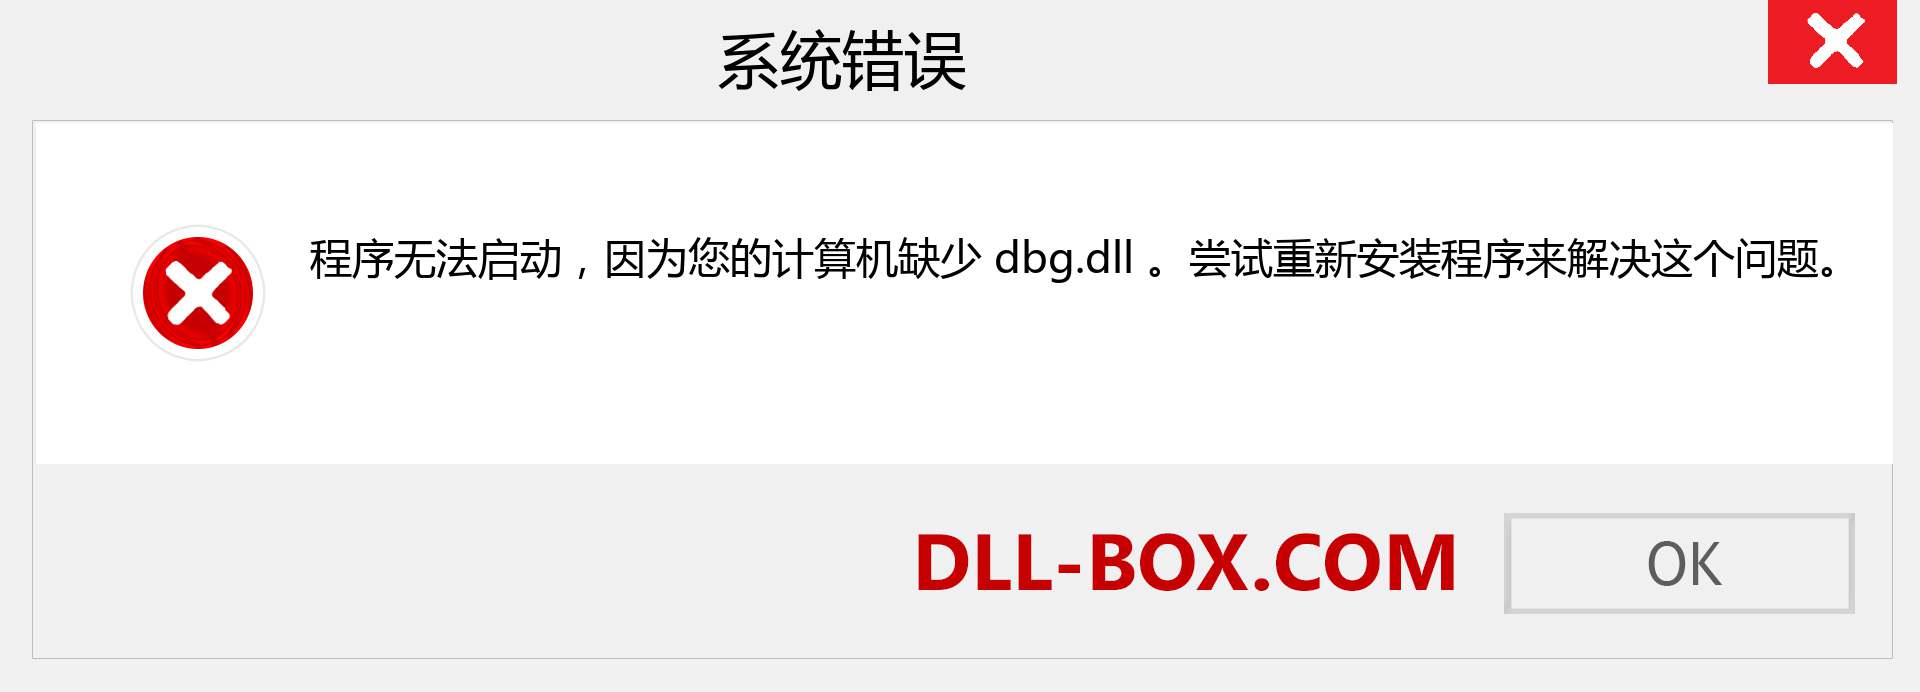 dbg.dll 文件丢失？。 适用于 Windows 7、8、10 的下载 - 修复 Windows、照片、图像上的 dbg dll 丢失错误